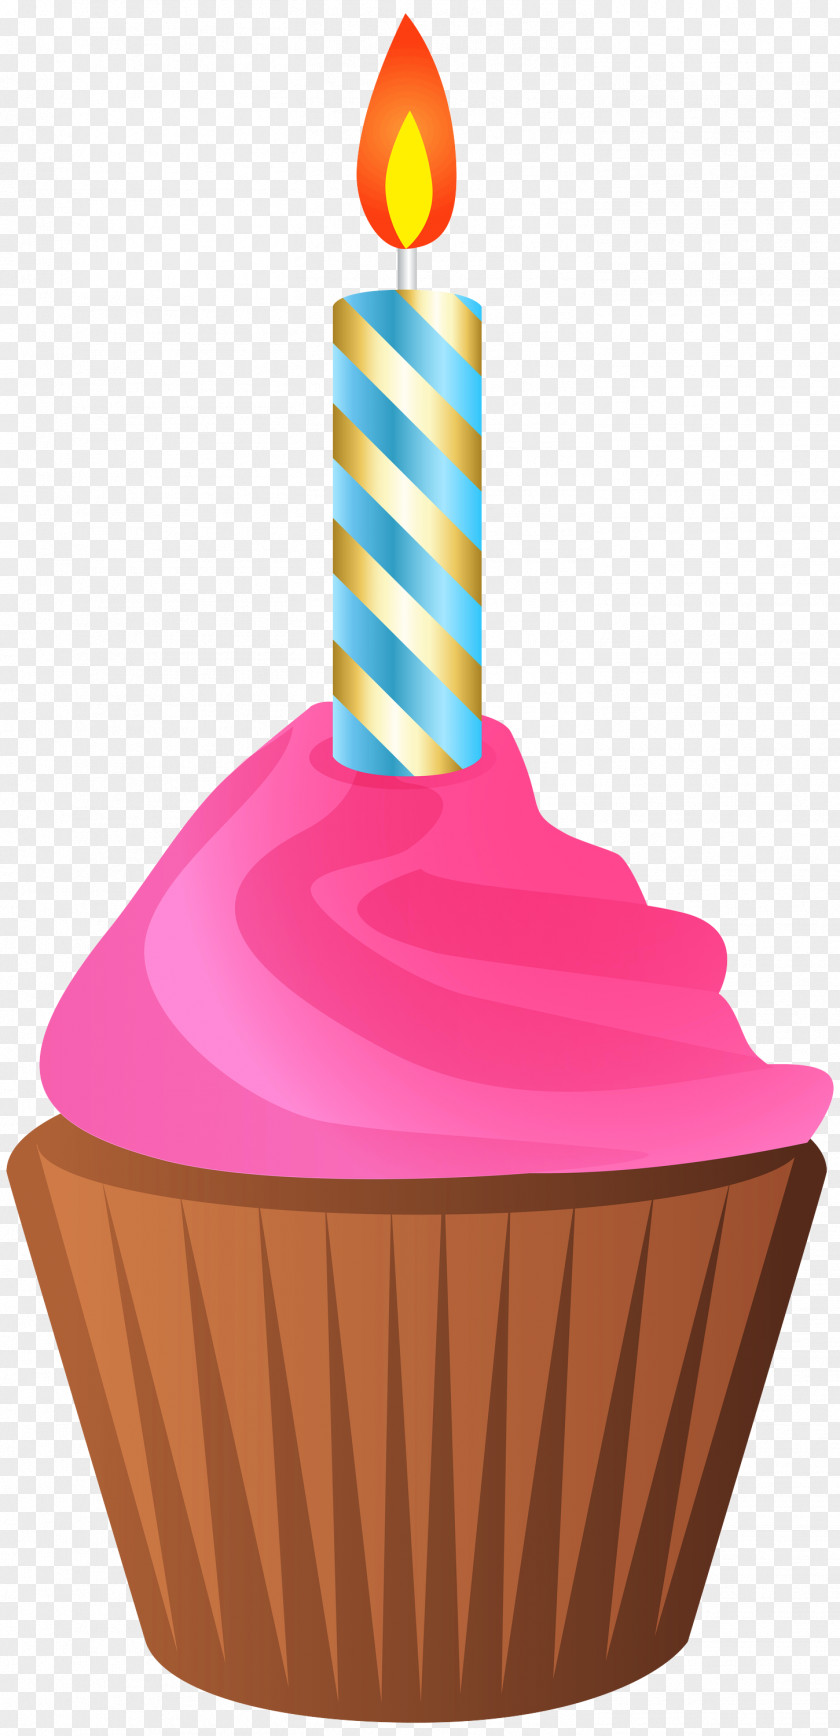 Cupcake Cake Birthday Candle PNG